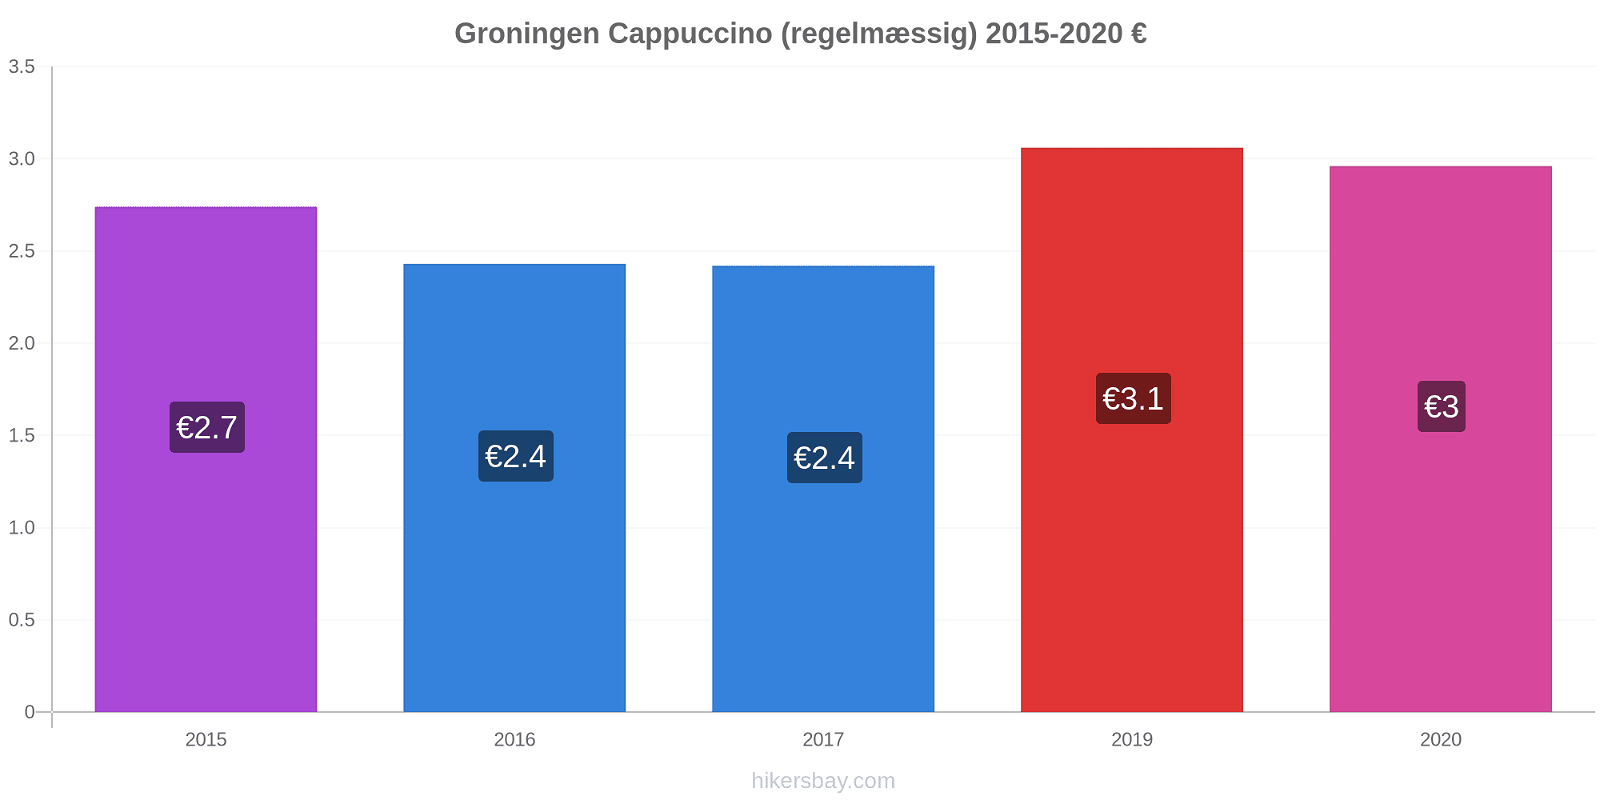 Groningen prisændringer Cappuccino (regelmæssig) hikersbay.com